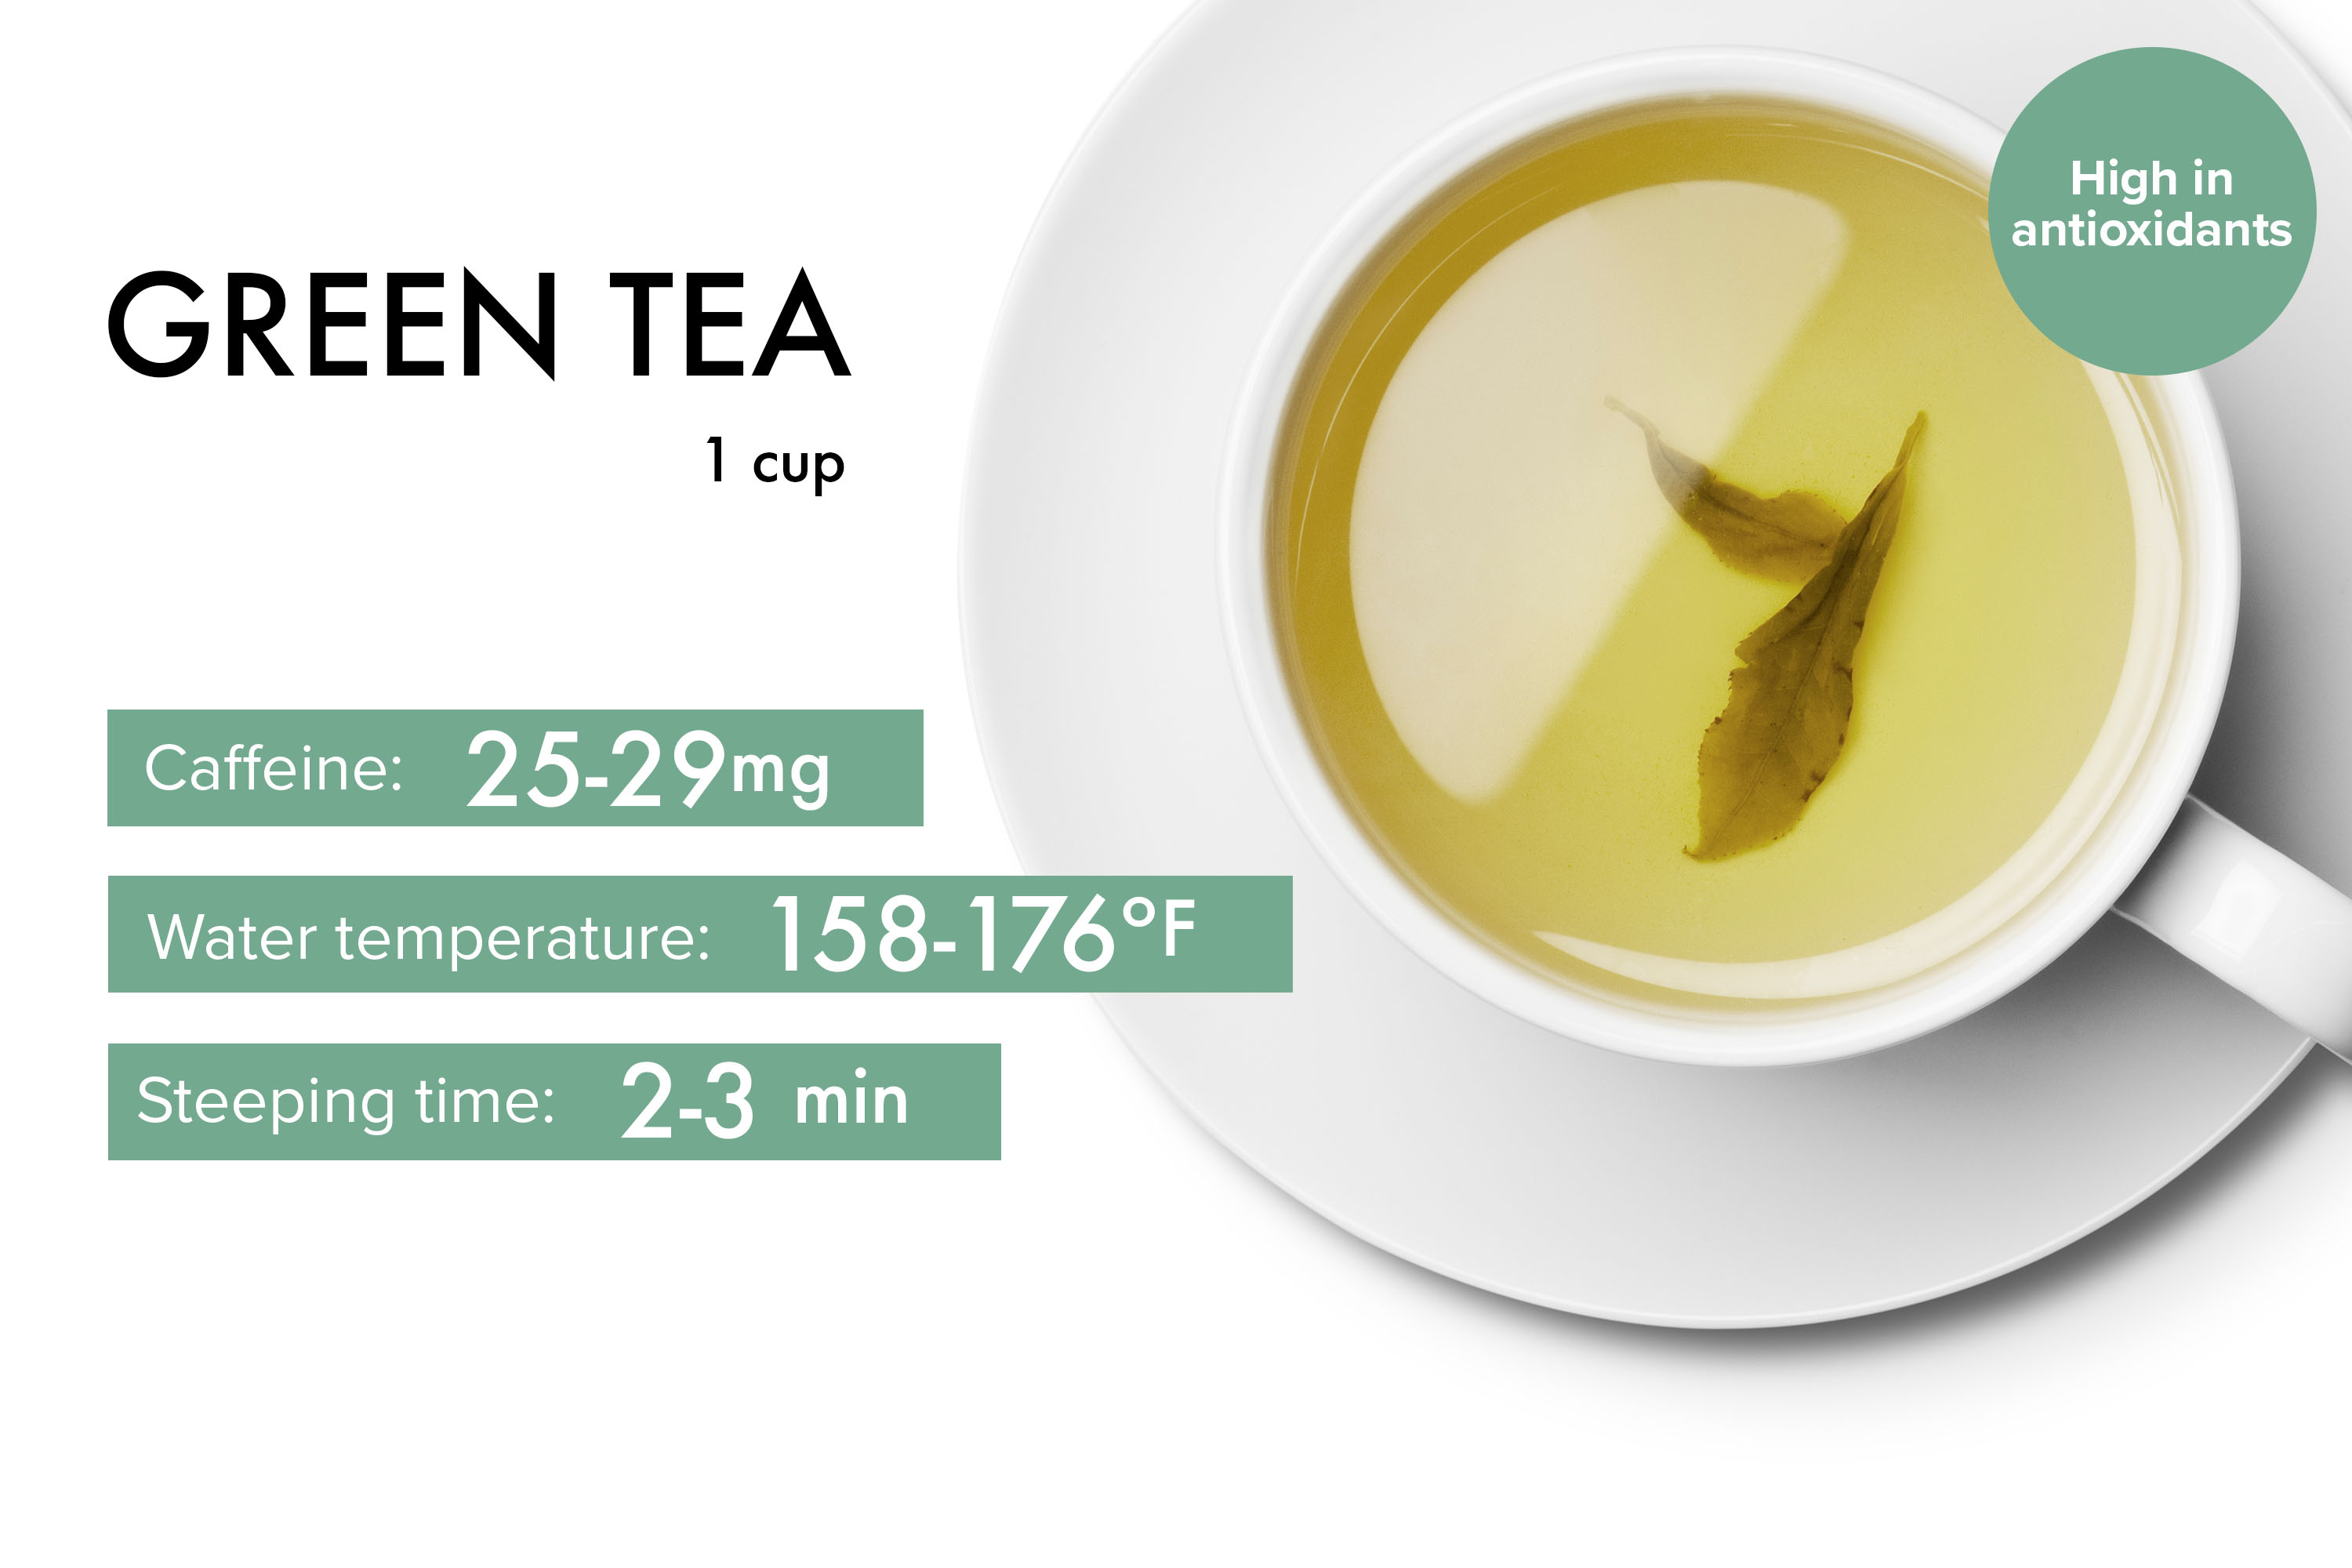 White Tea Vs. Matcha Green Tea. Which is healthier?, by Tea Trunk